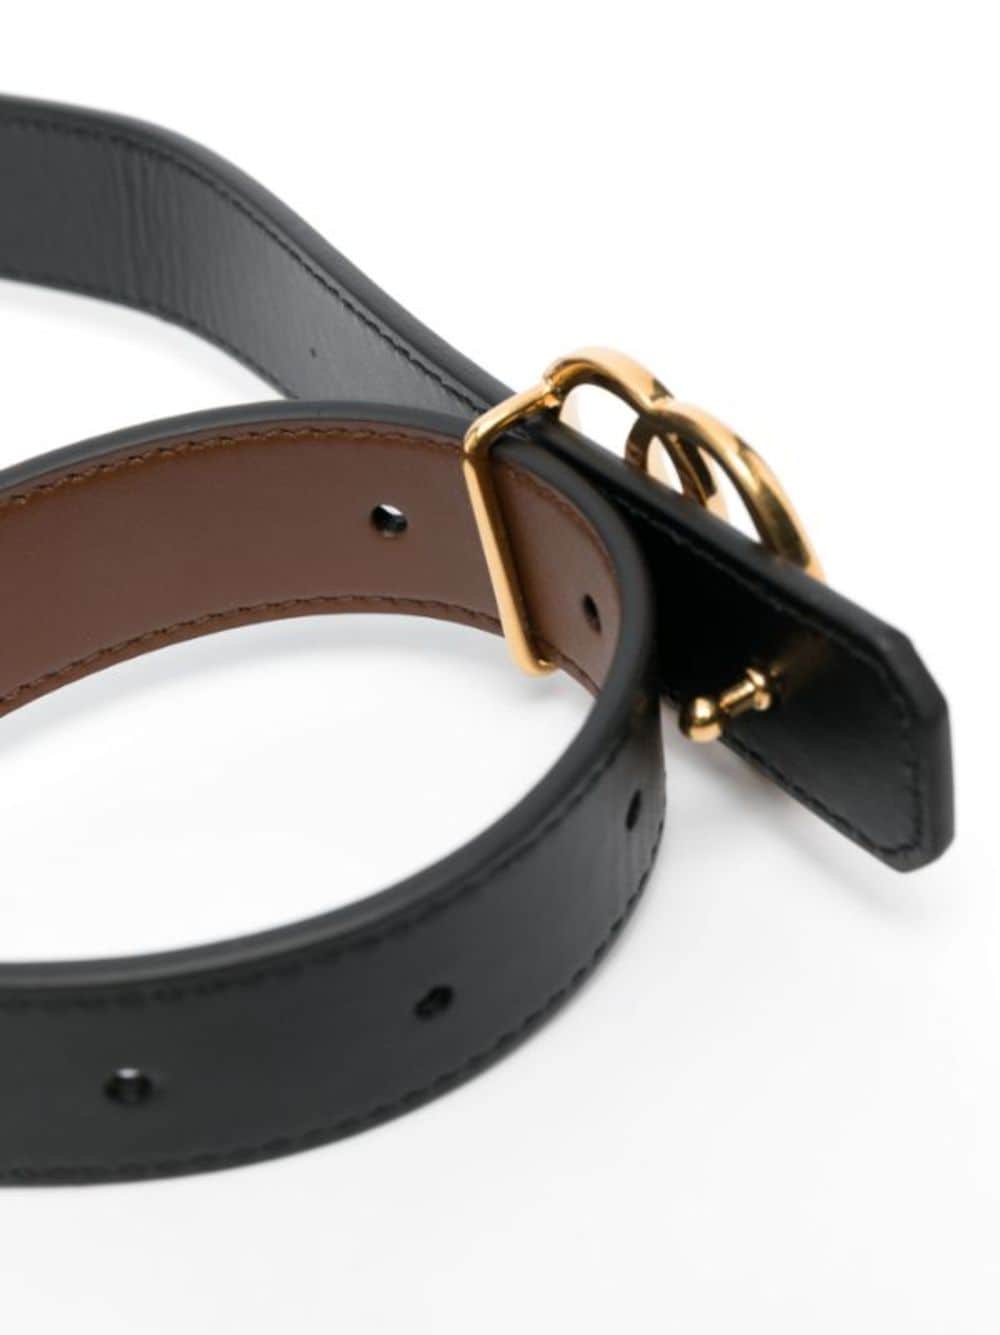 Louis Vuitton 16 mm Adjustable Shoulder Strap in Calfskin - SOLD